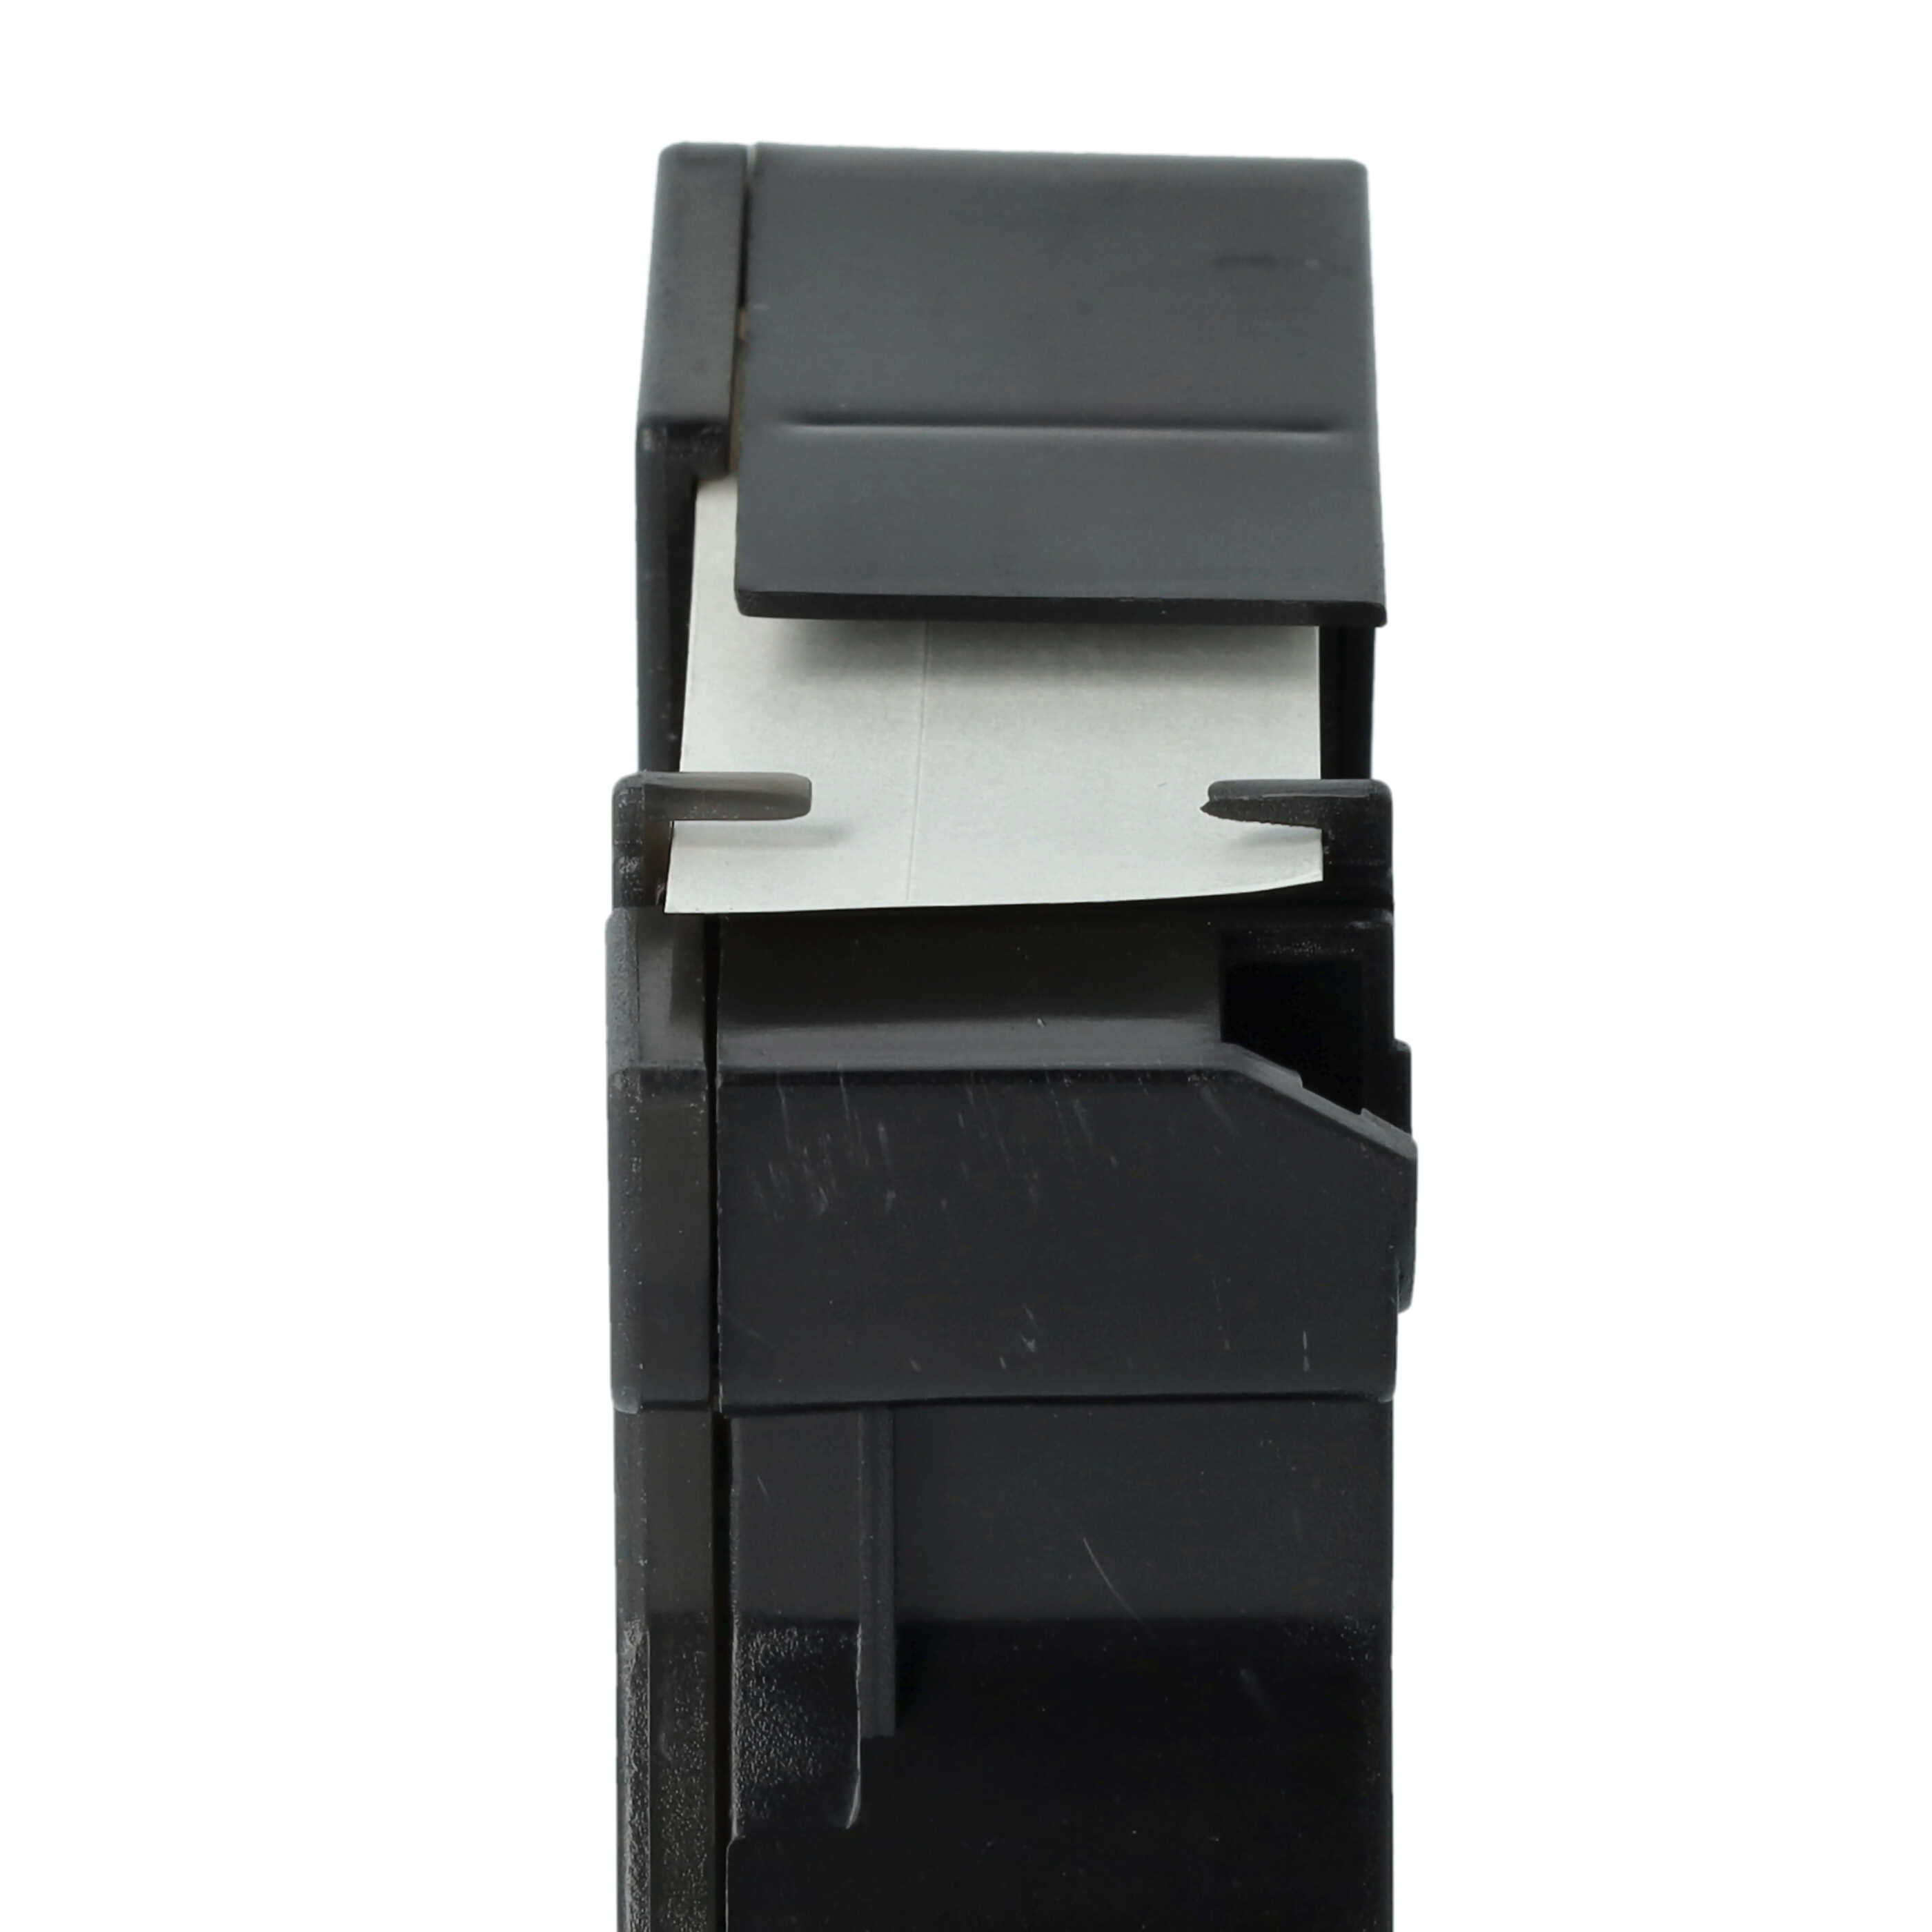 Casete cinta escritura reemplaza Dymo 45803, D1, S0720830 Negro su Blanco